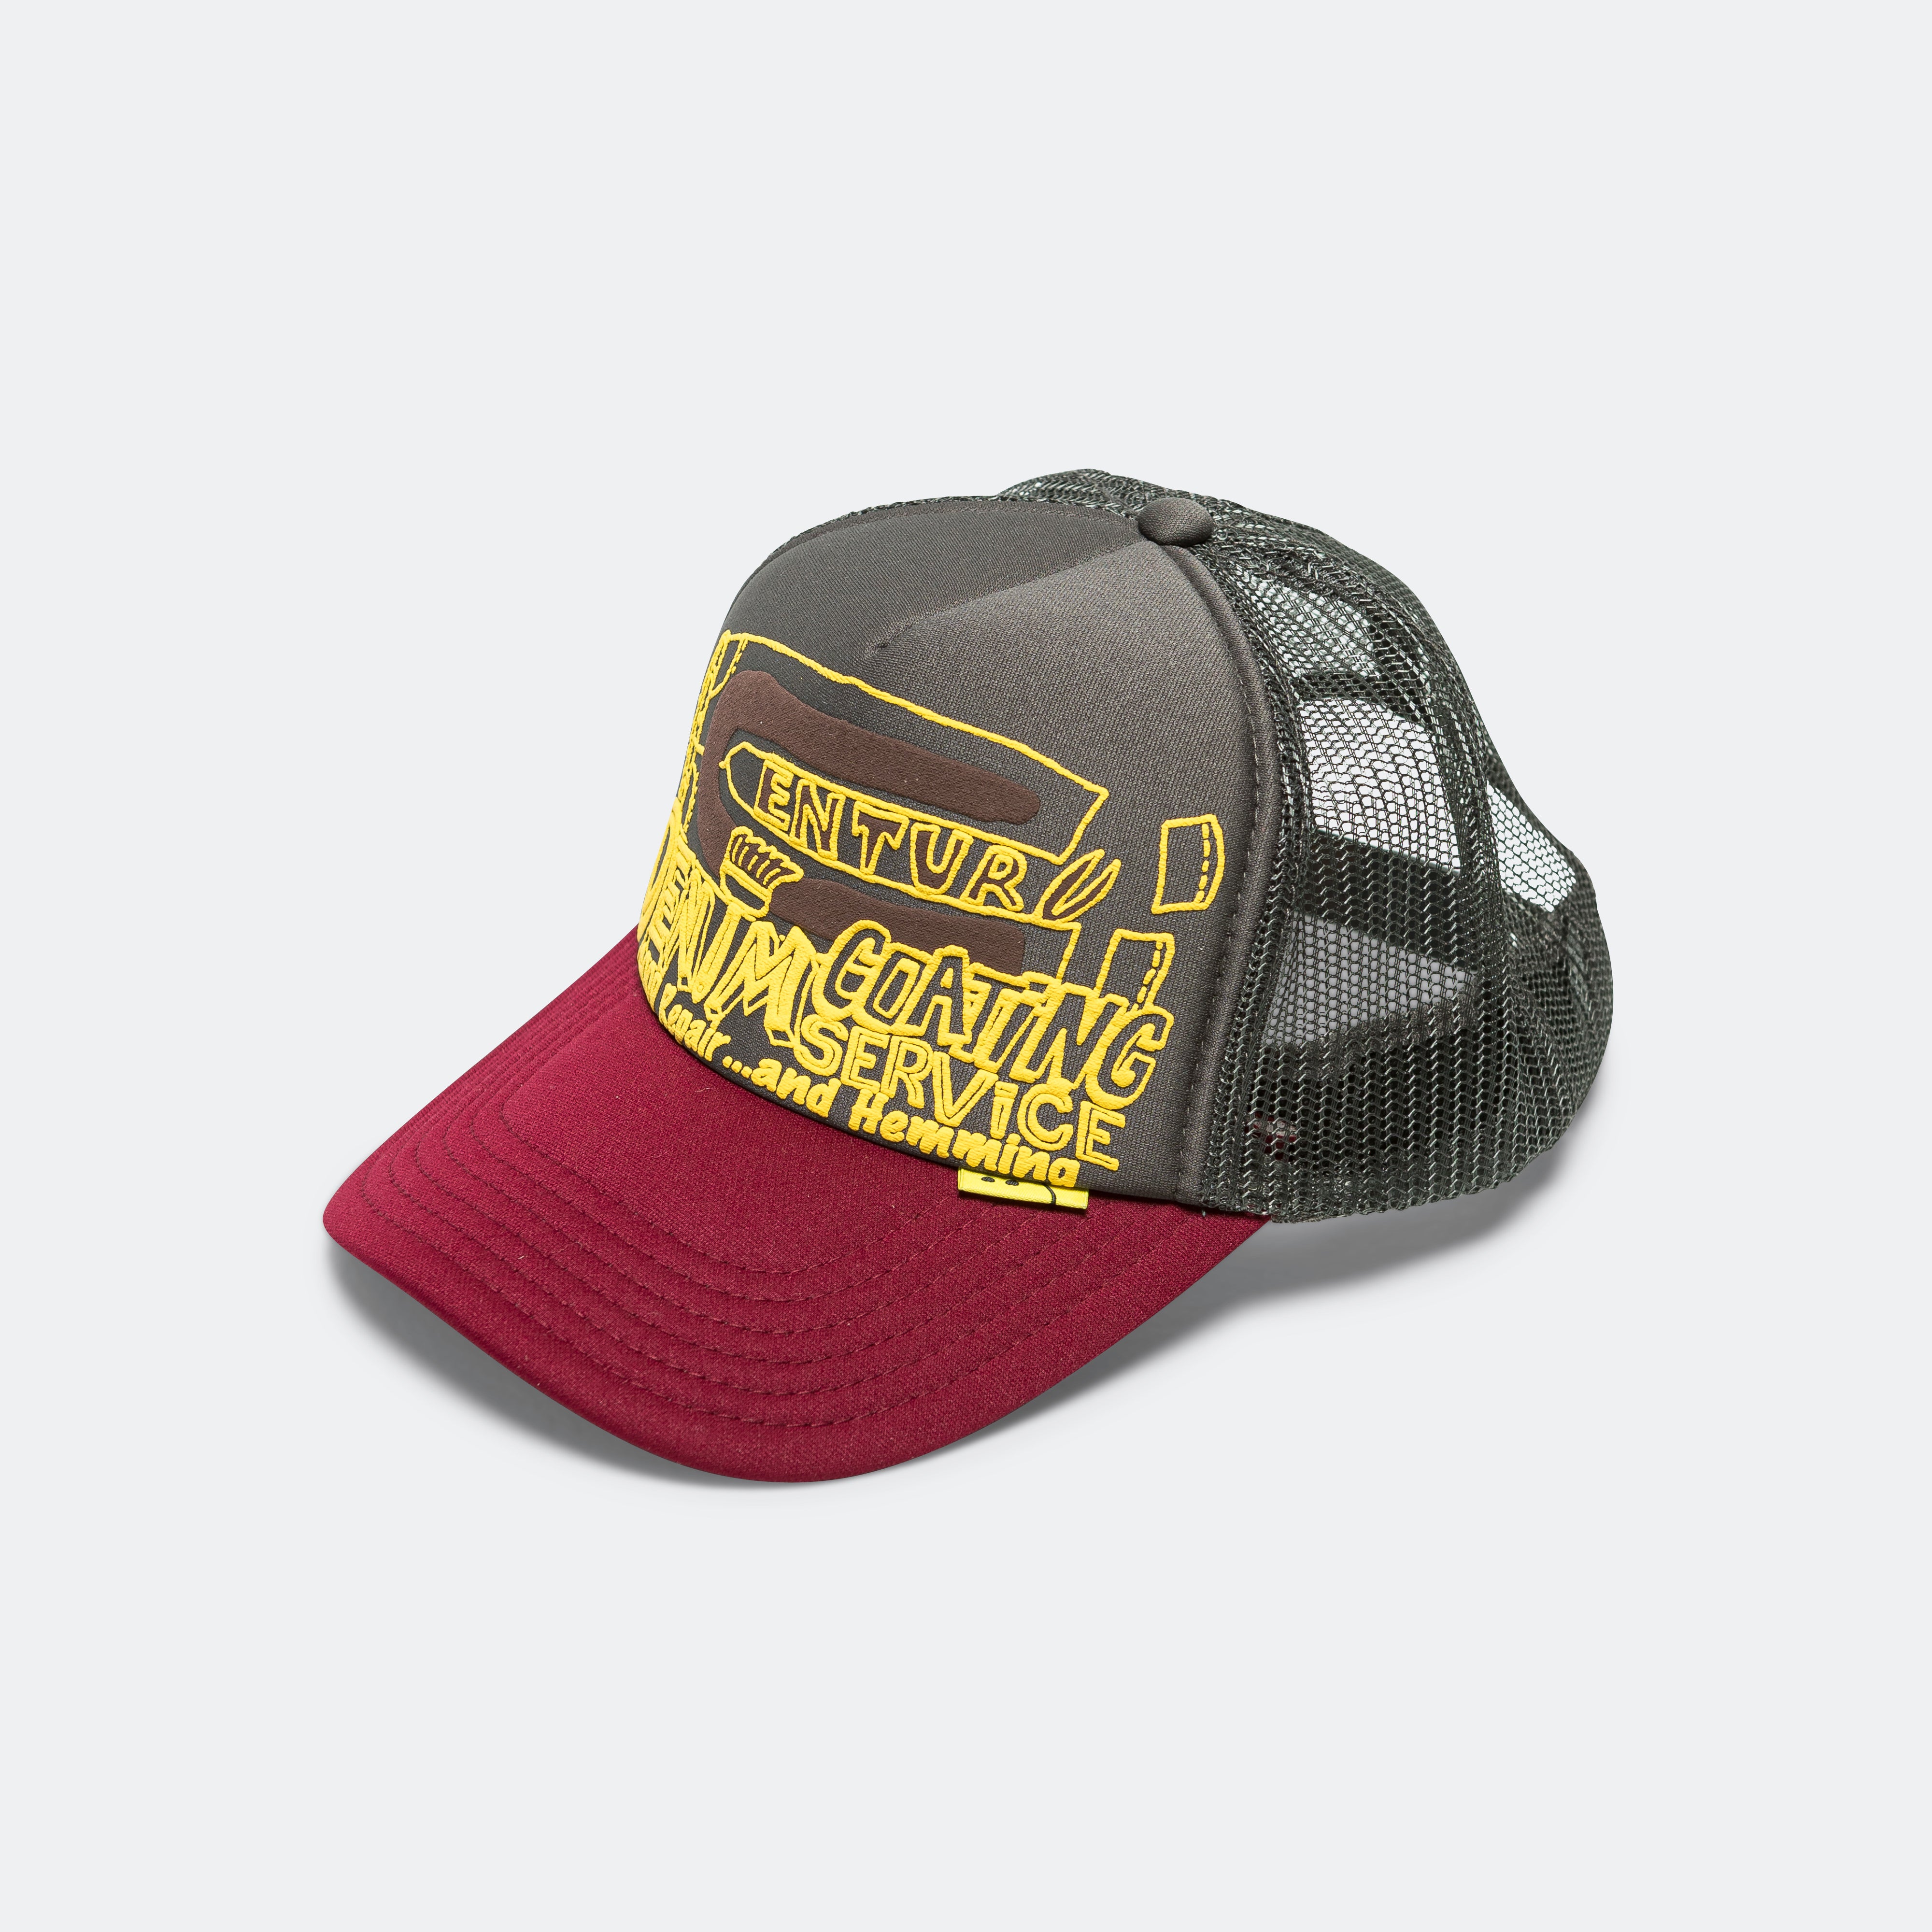 Kapital Century Denim Trucker Hat | hartwellspremium.com